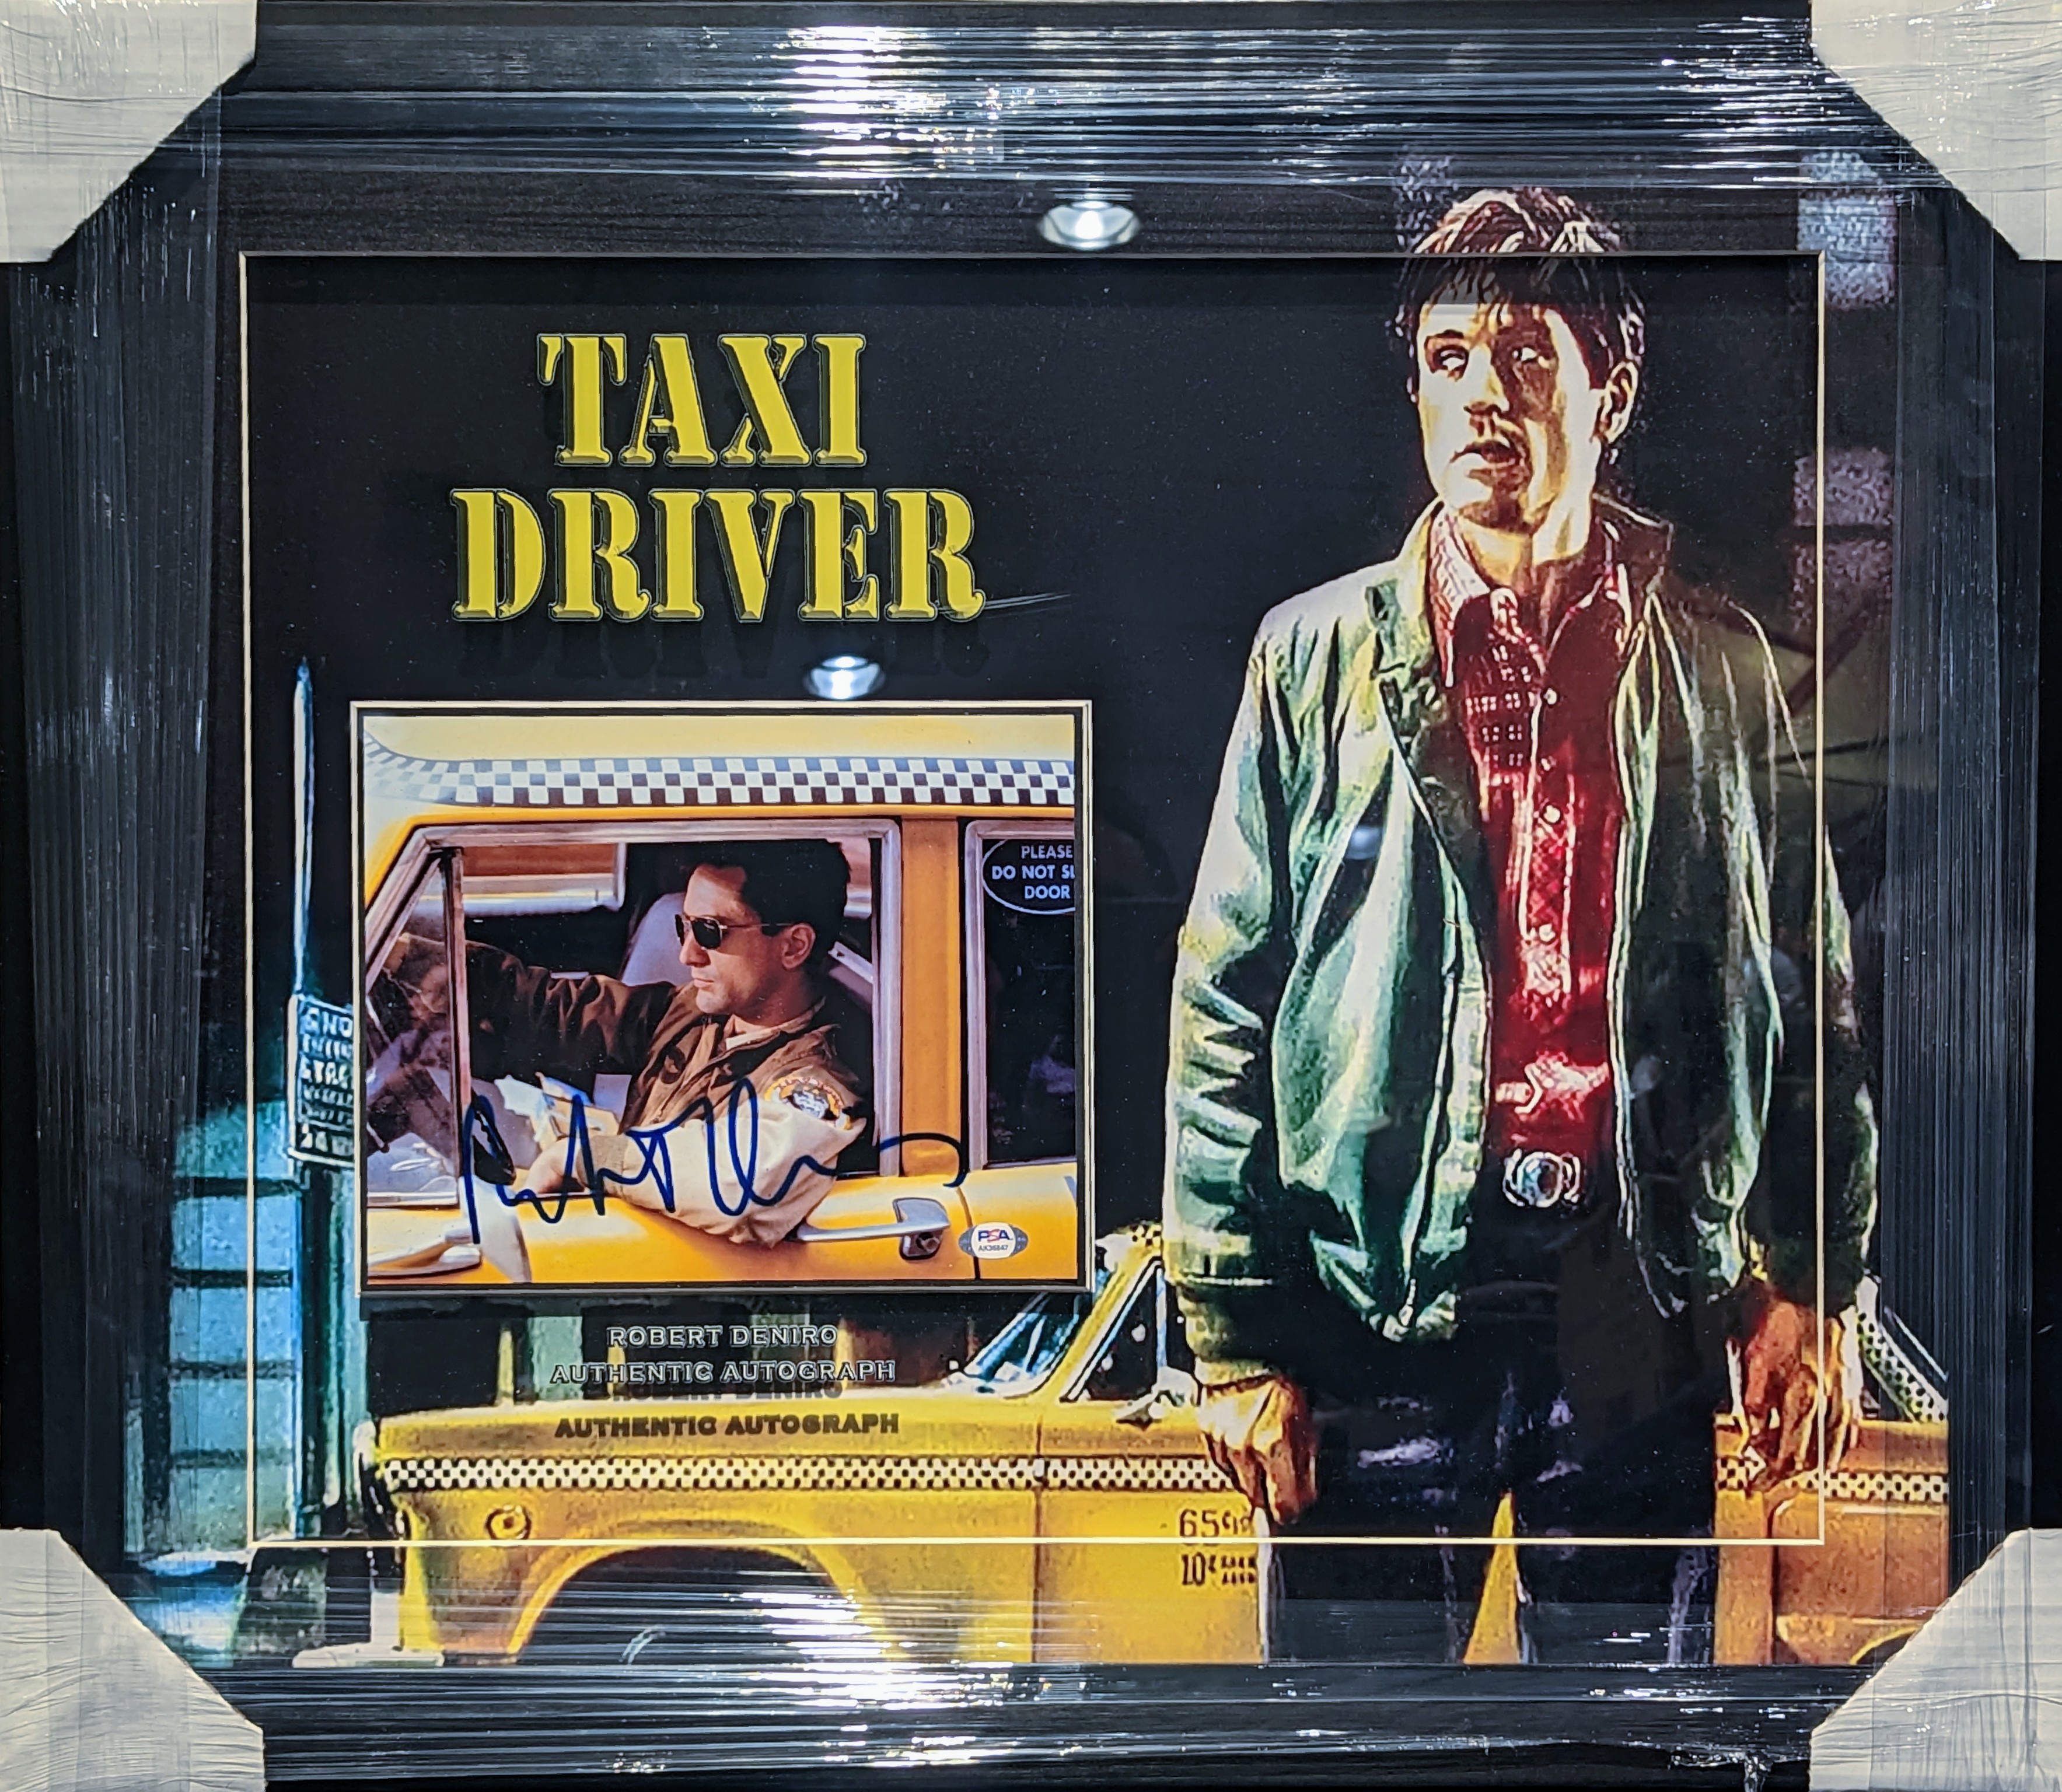 Robert Deniro "Taxi Driver"